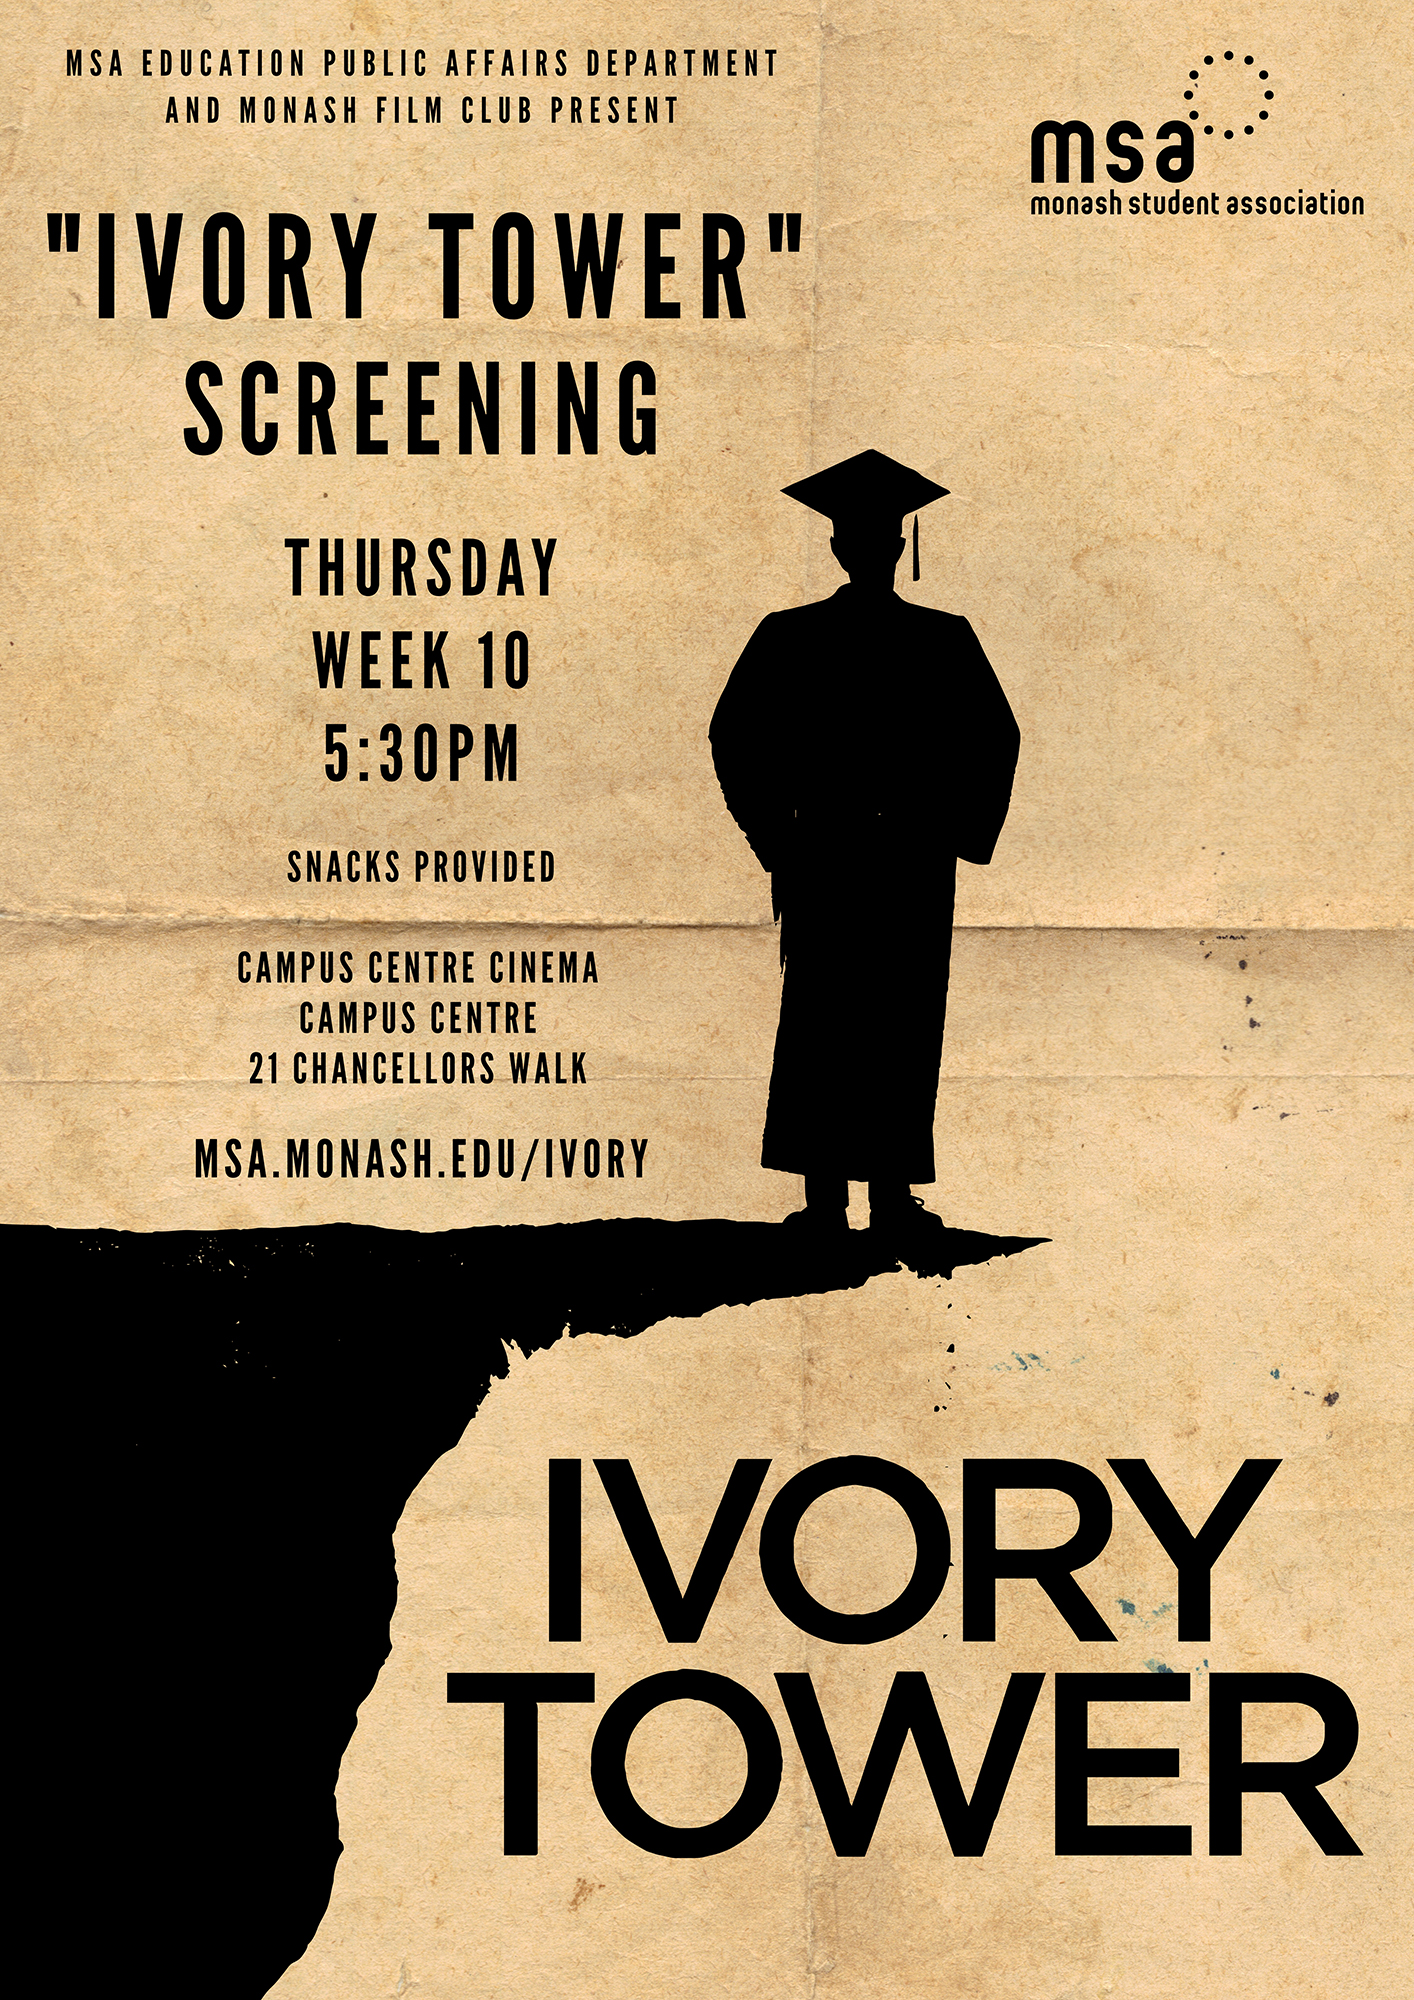 Ivory Tower screening